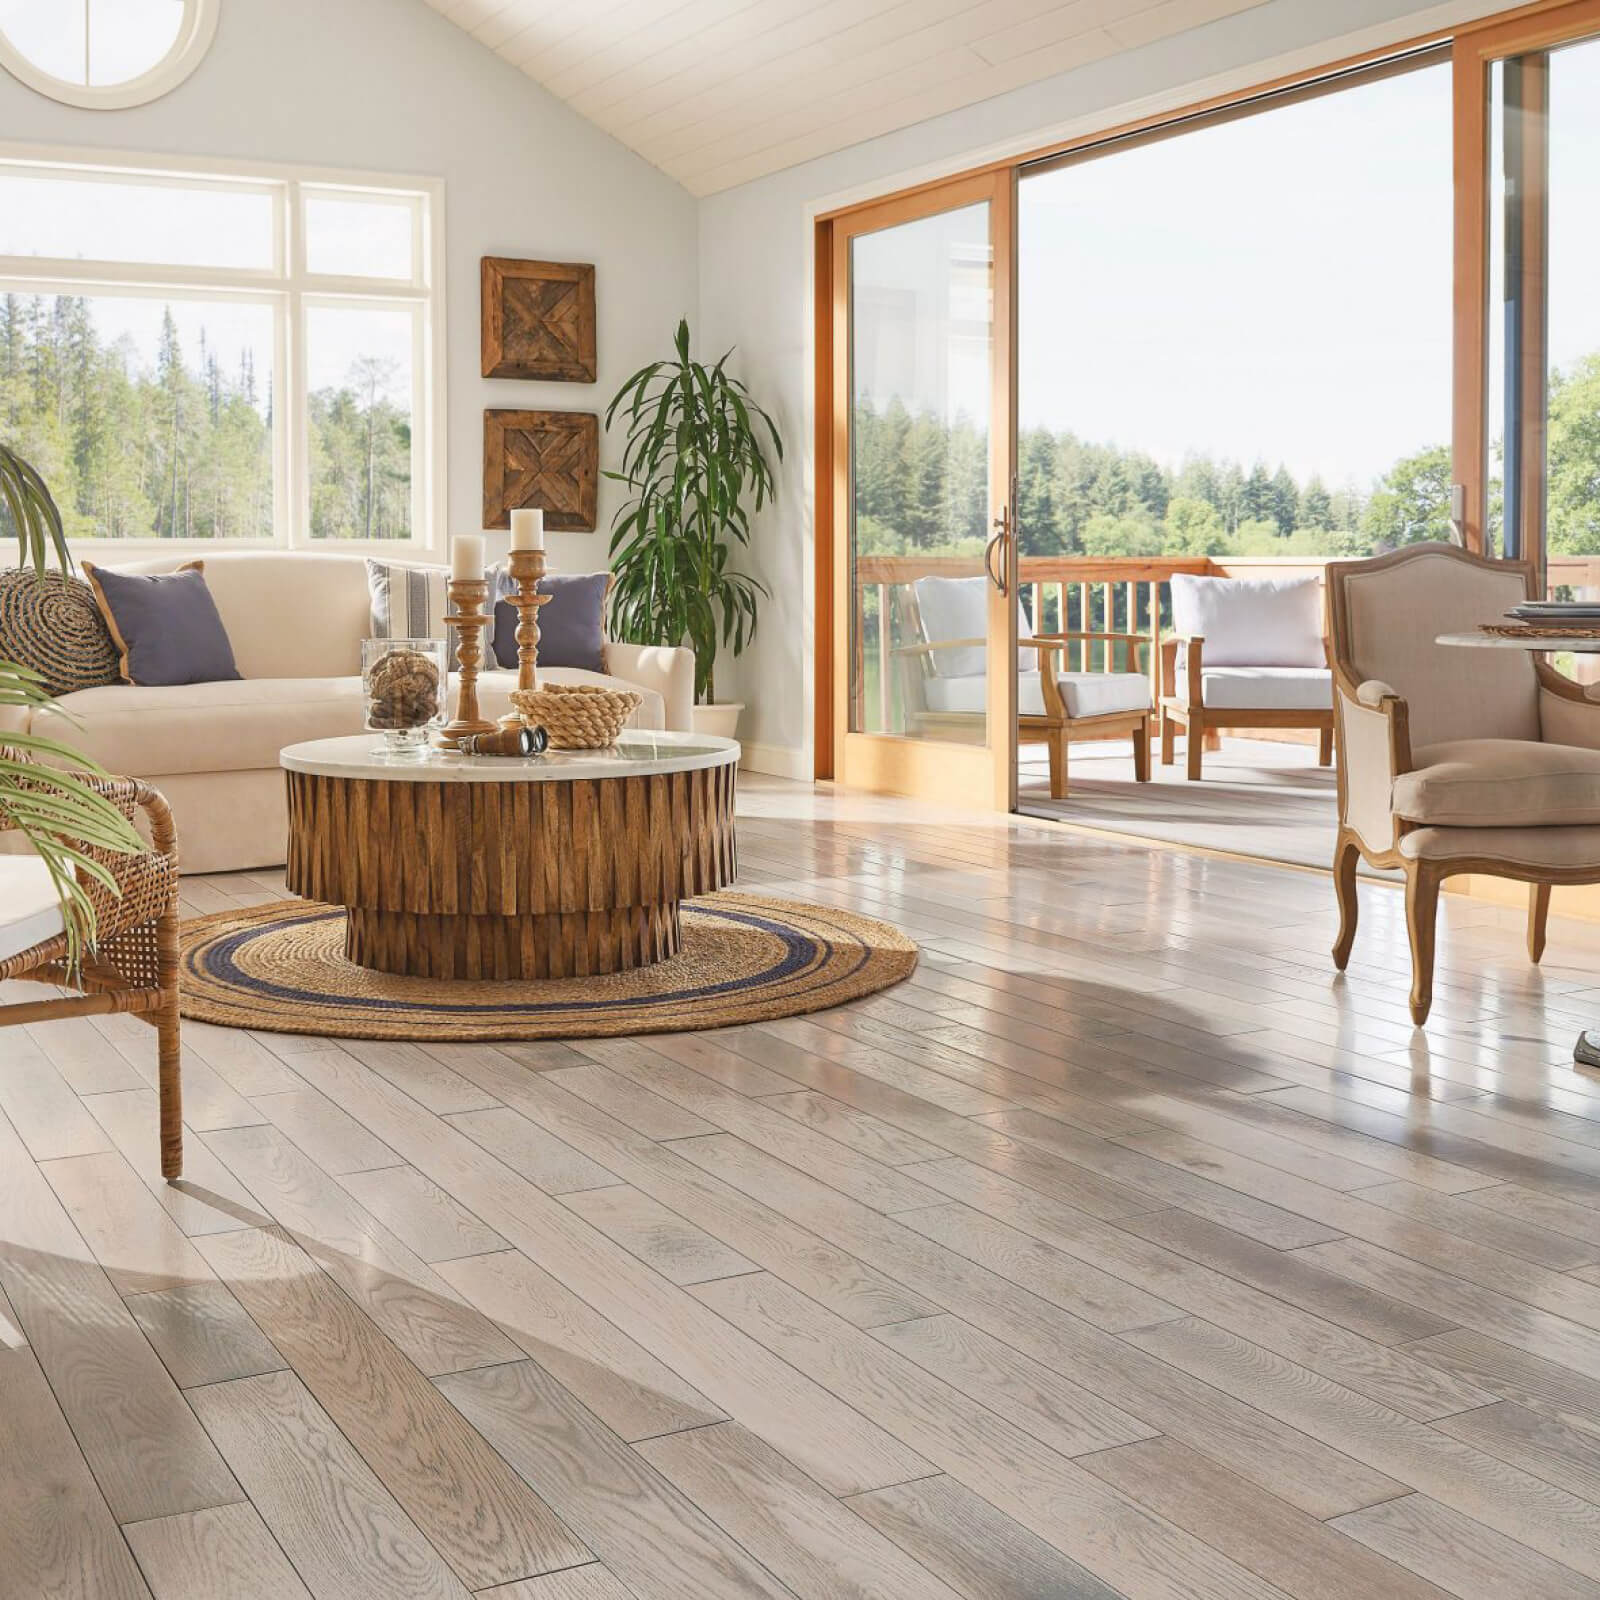 Hardwood flooring in living room | Brian's Flooring & Design